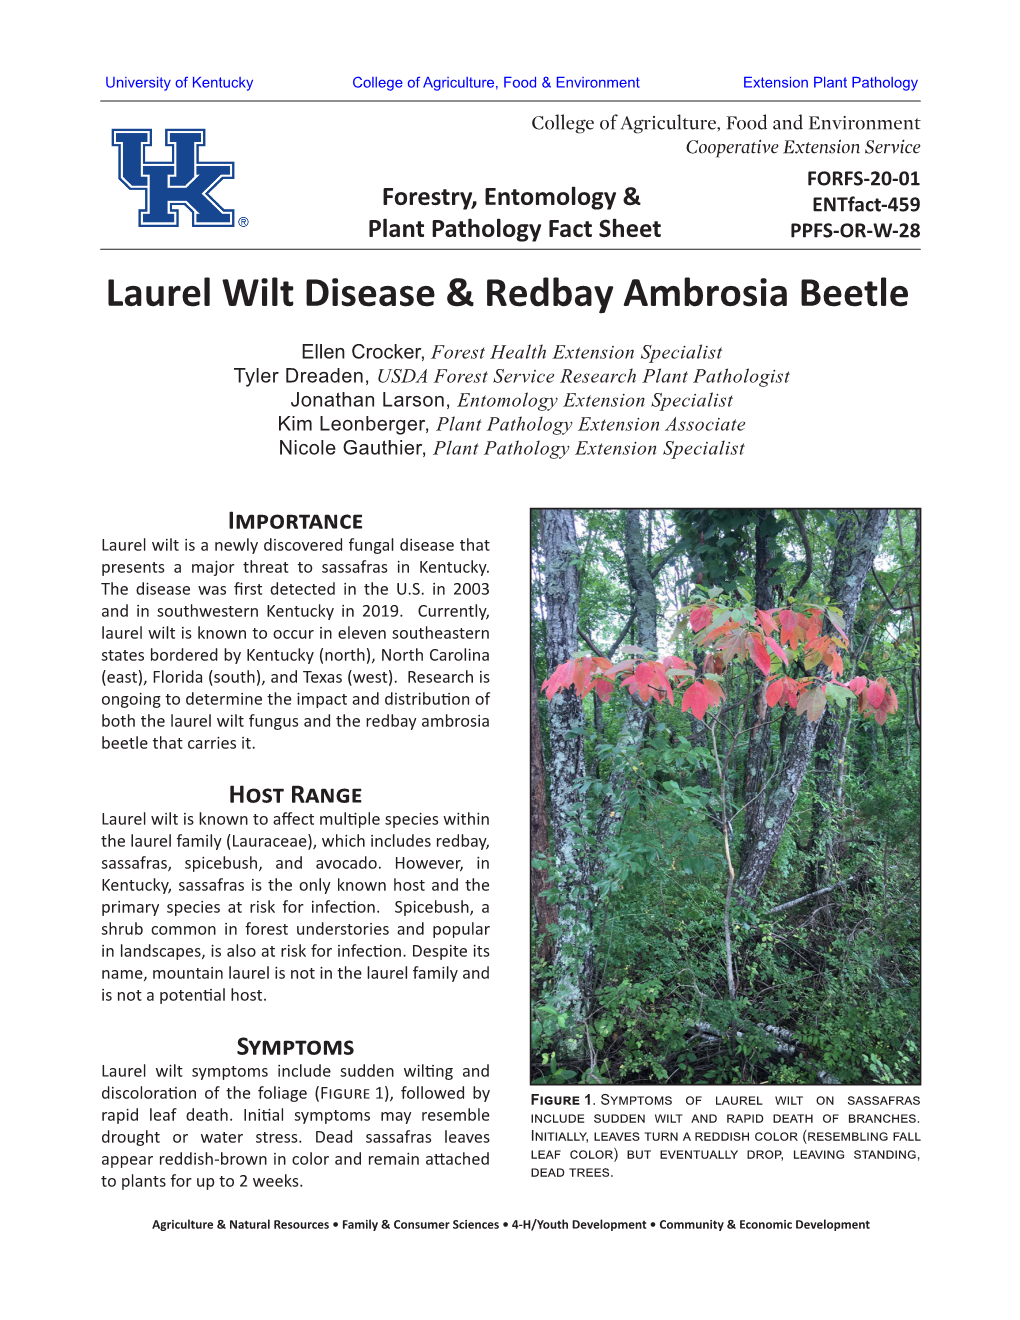 Laurel Wilt Disease & Redbay Ambrosia Beetle